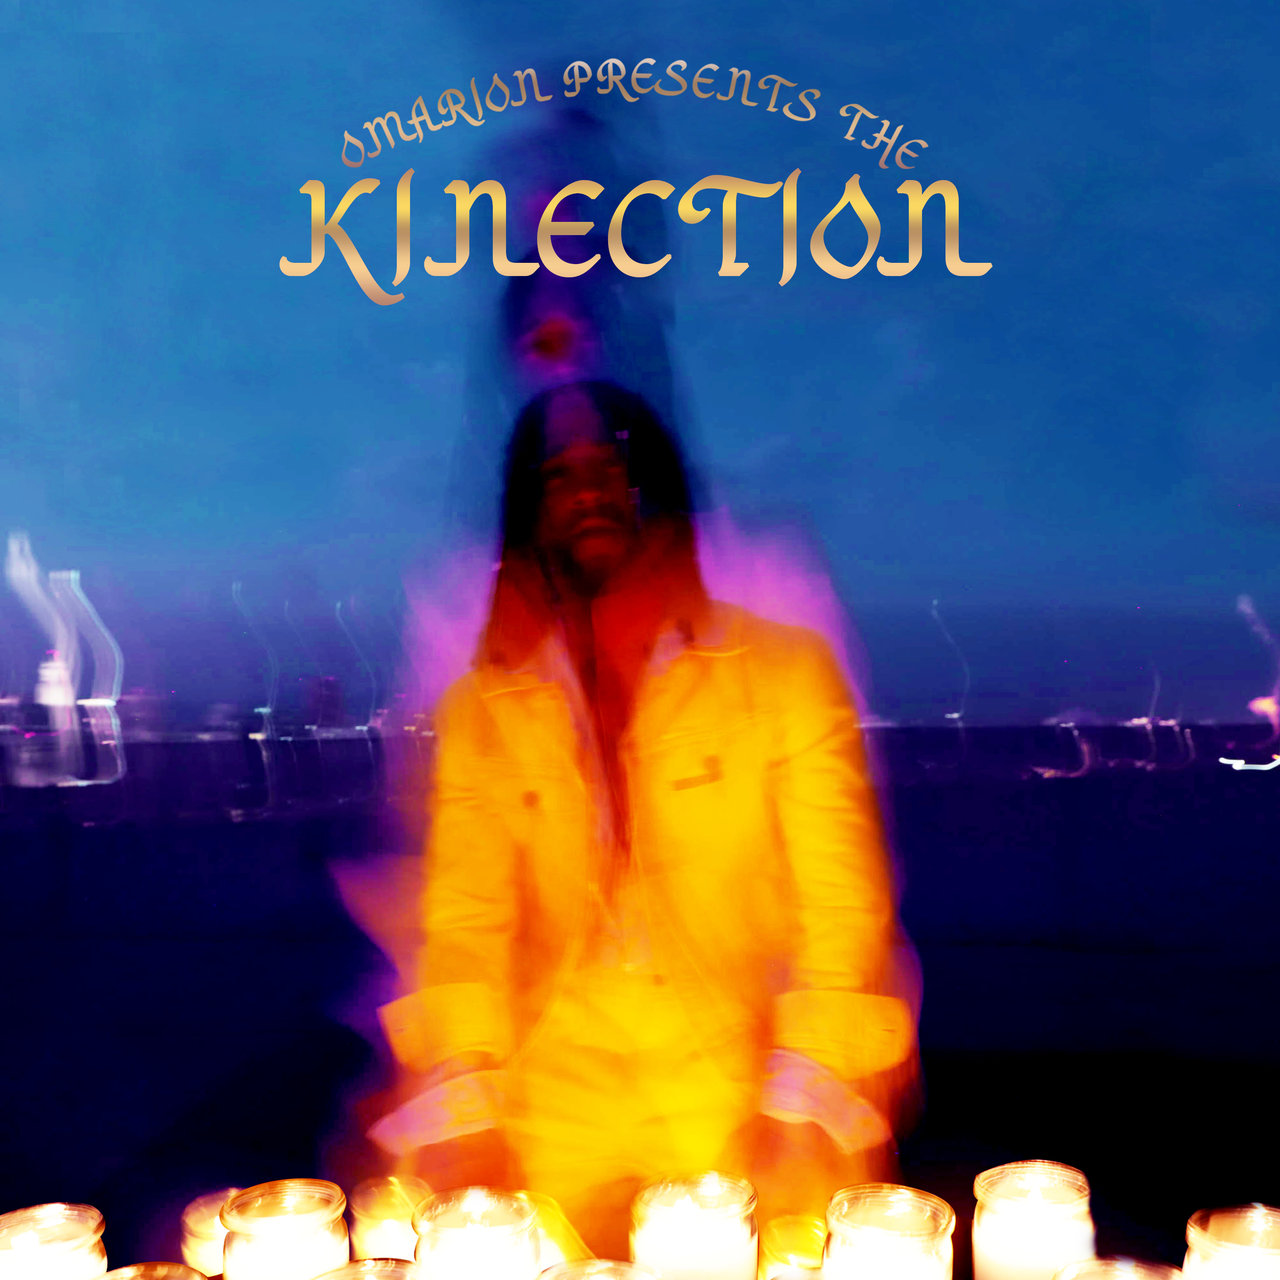 Omarion Releases New Album “The Kinection” (Album Stream)